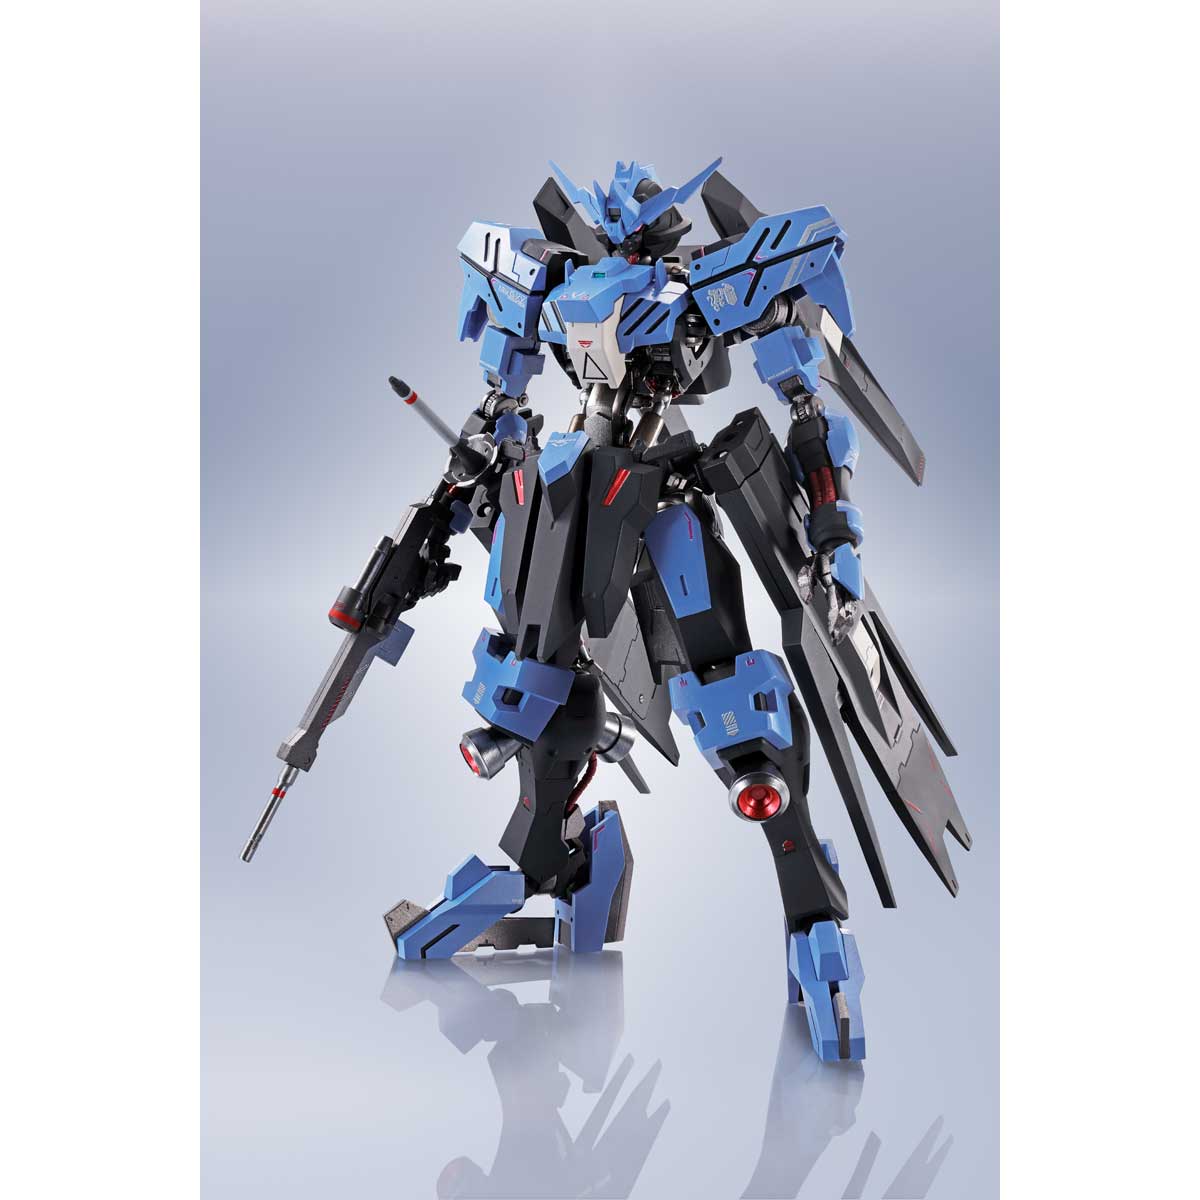 Metal Robot Spirits Side Ms Gundam Vidar Gundam Premium Bandai Singapore Online Store For Action Figures Model Kits Toys And More